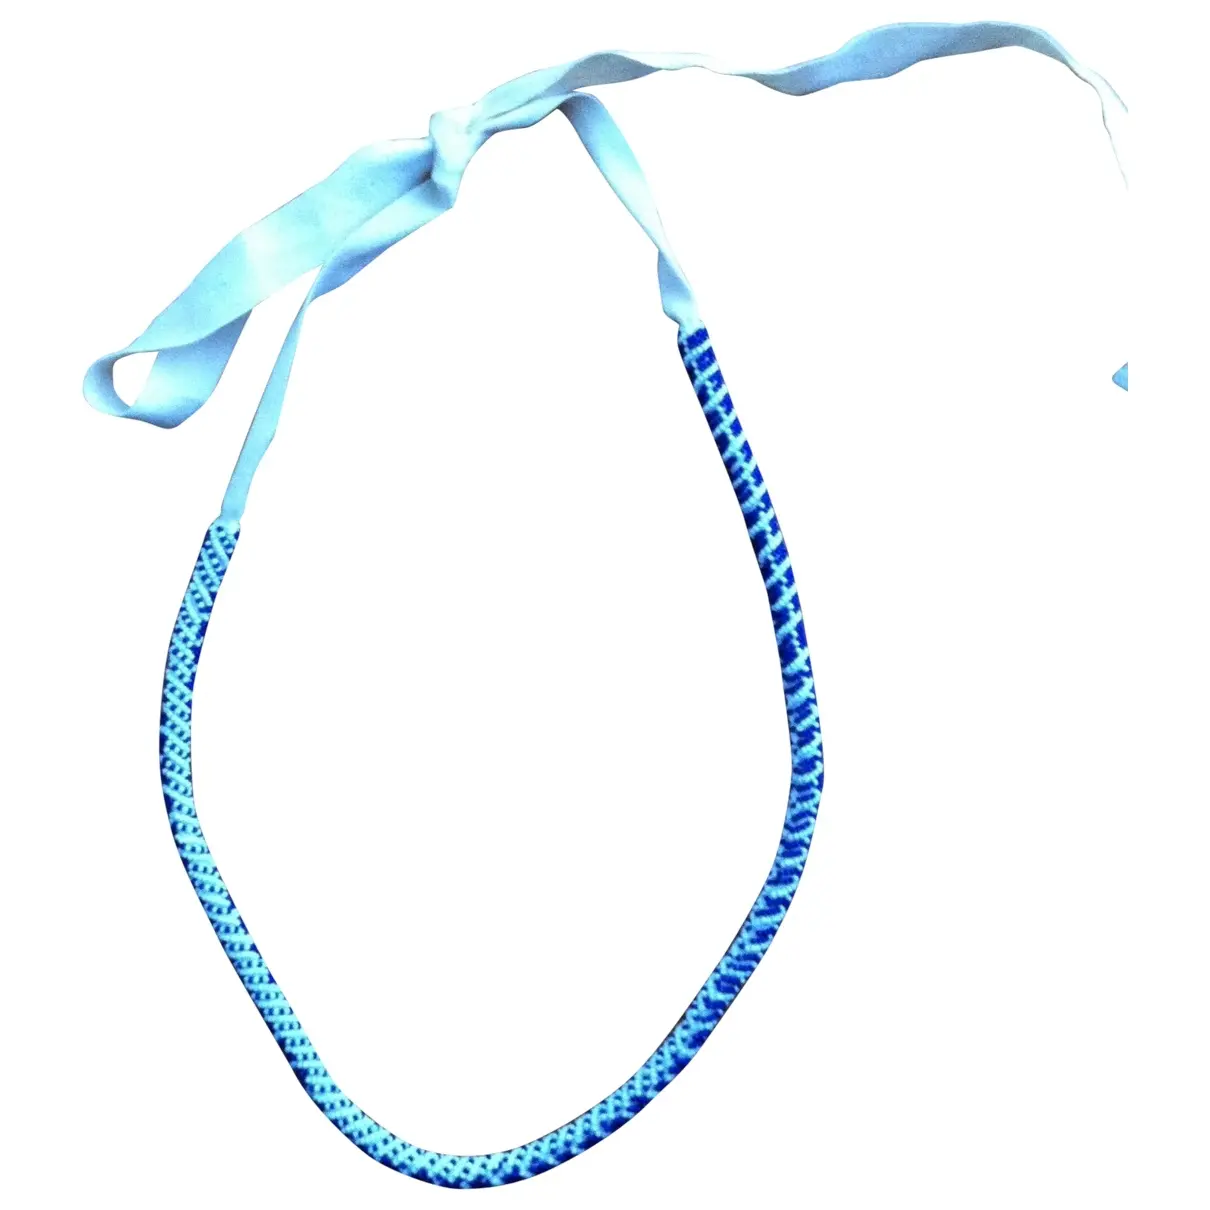 Long necklace Isabel Marant